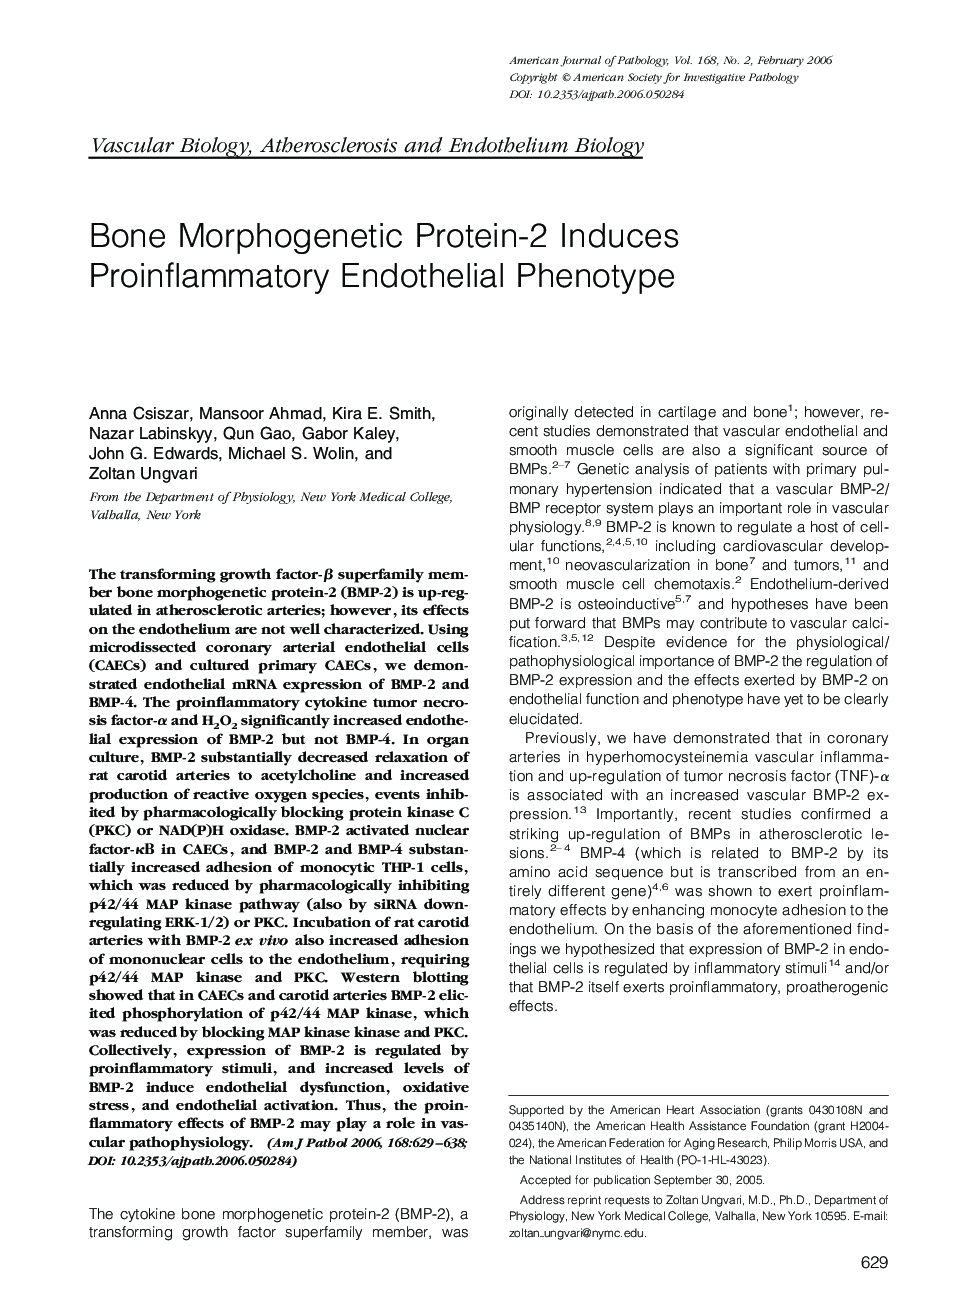 Bone Morphogenetic Protein-2 Induces Proinflammatory Endothelial Phenotype